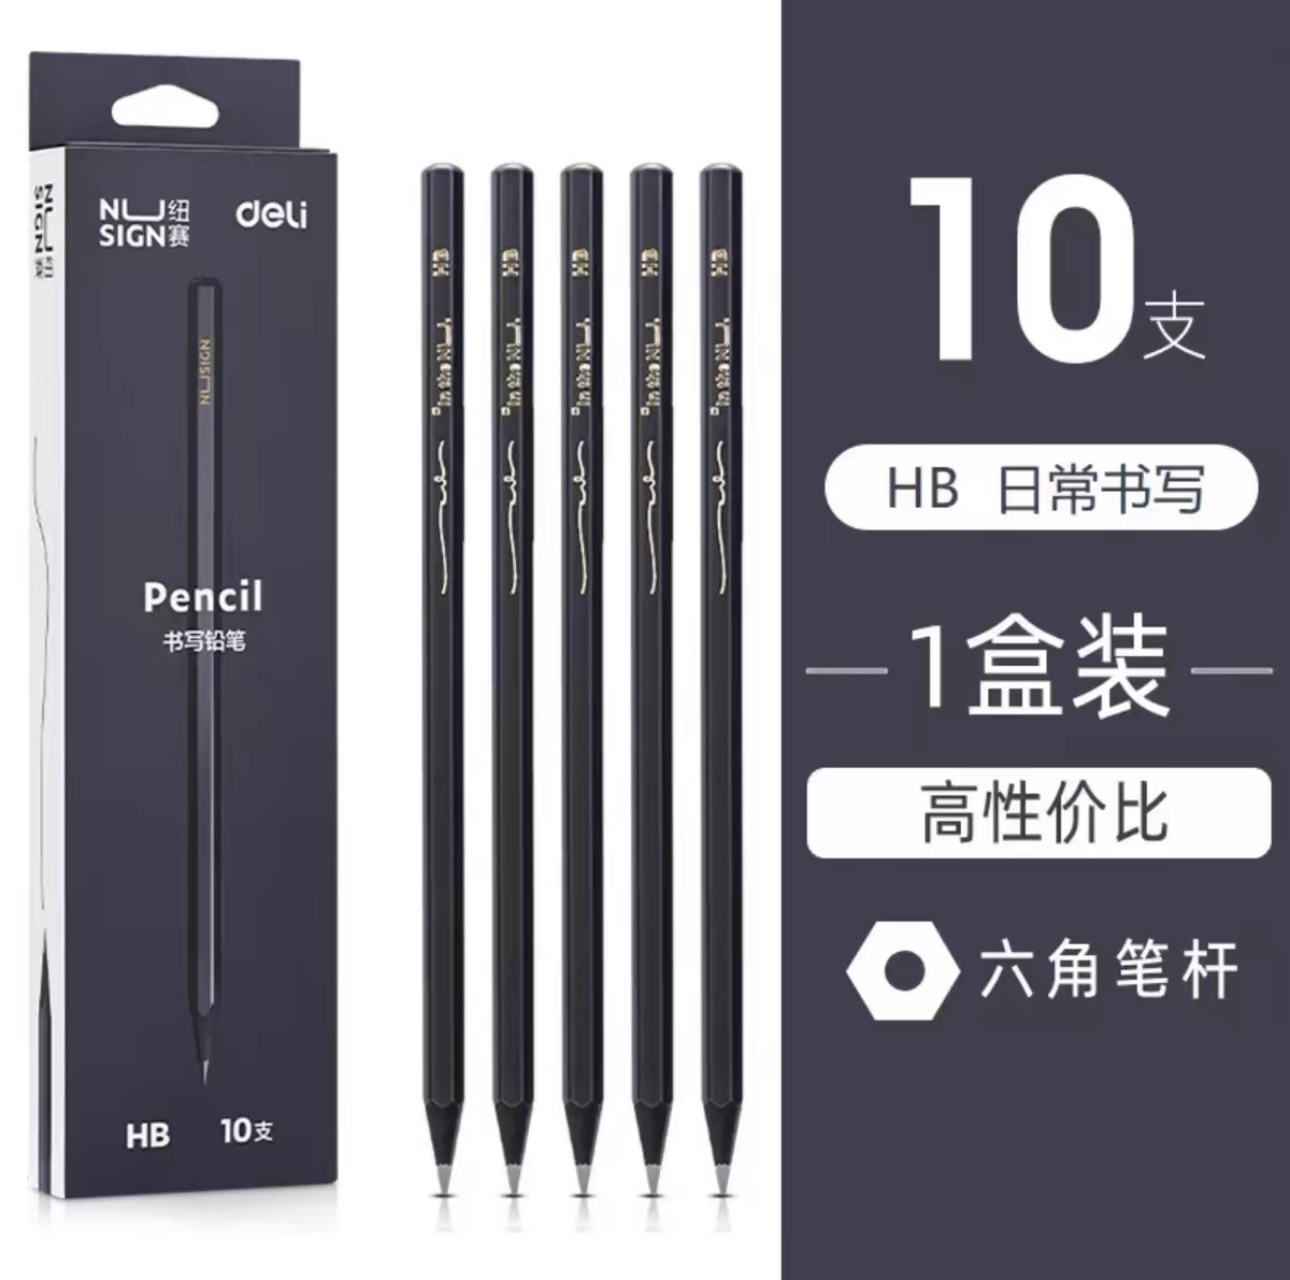 Nusign Pencils 10 Pieces